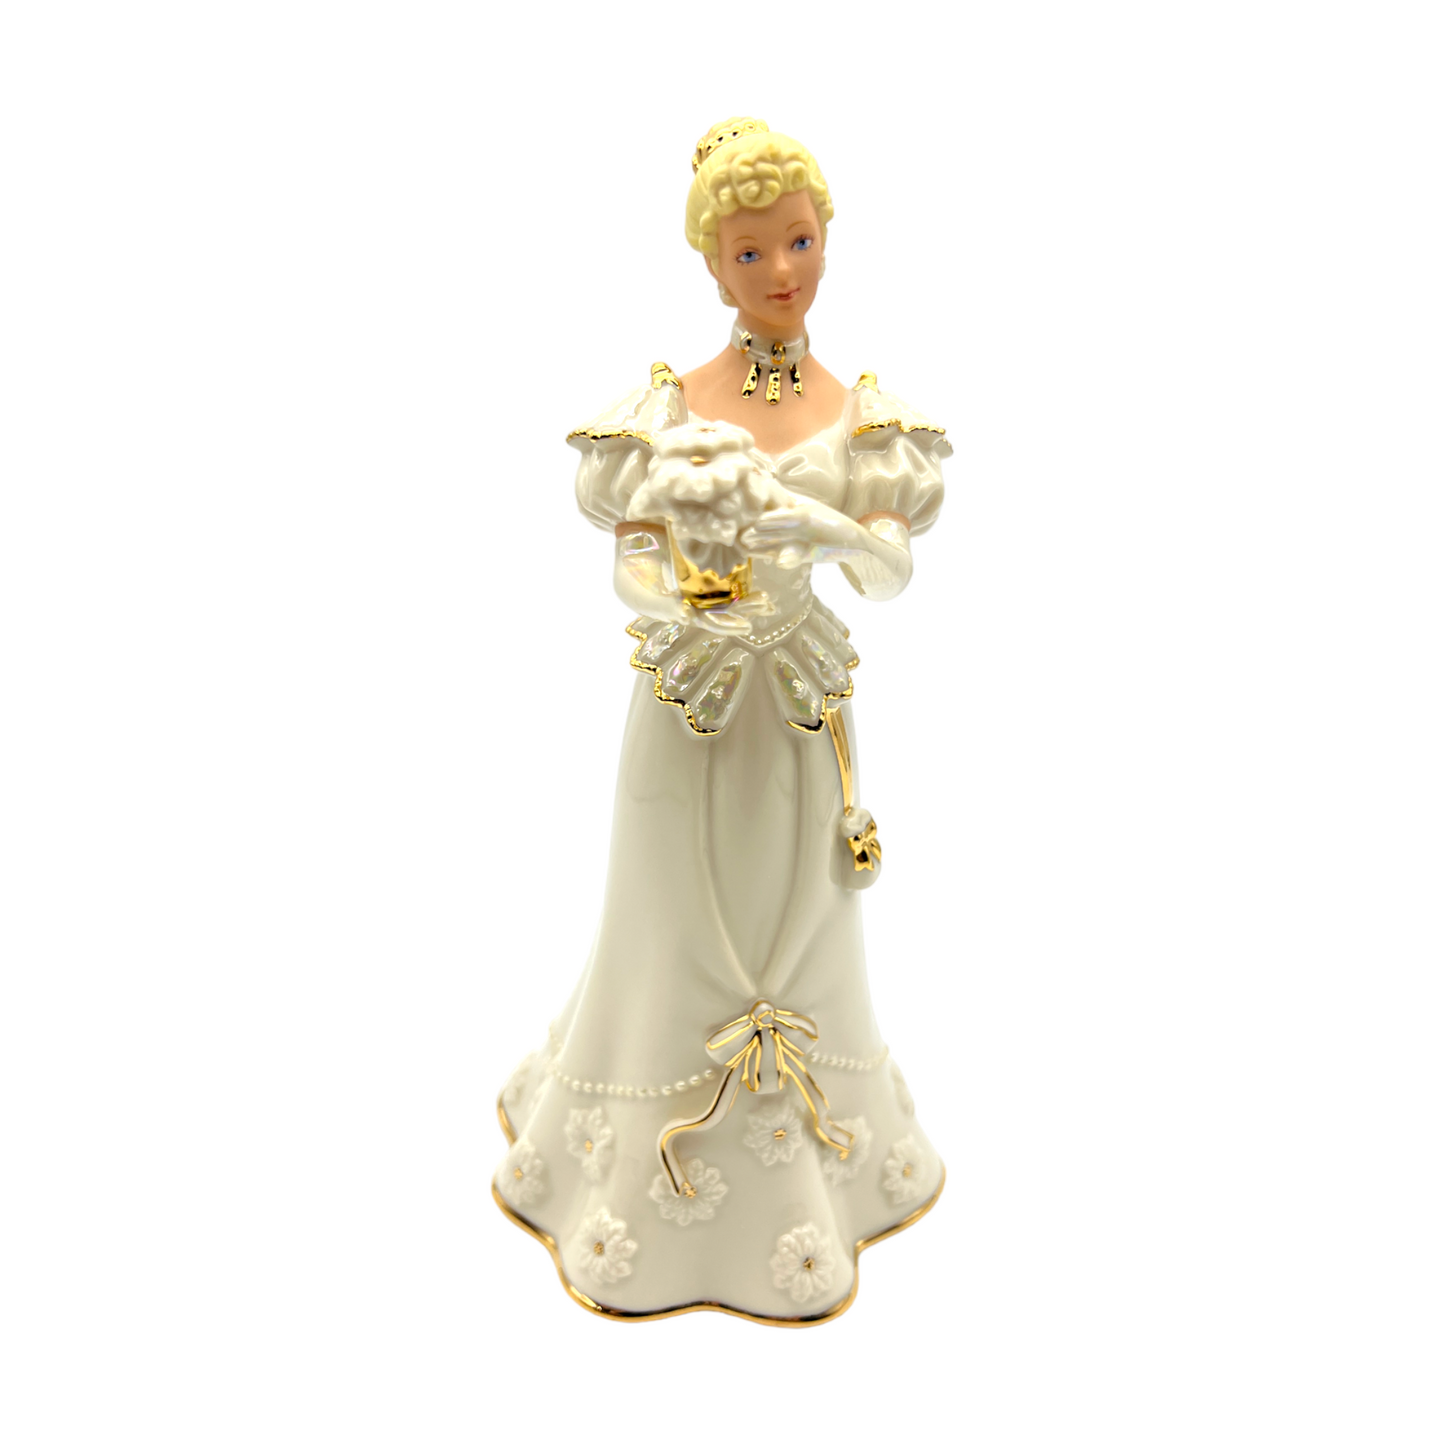 Lenox - Decorating For Christmas - 2003 Ivory Classic Figurine - Limited Edition - Original Box - 9.25"